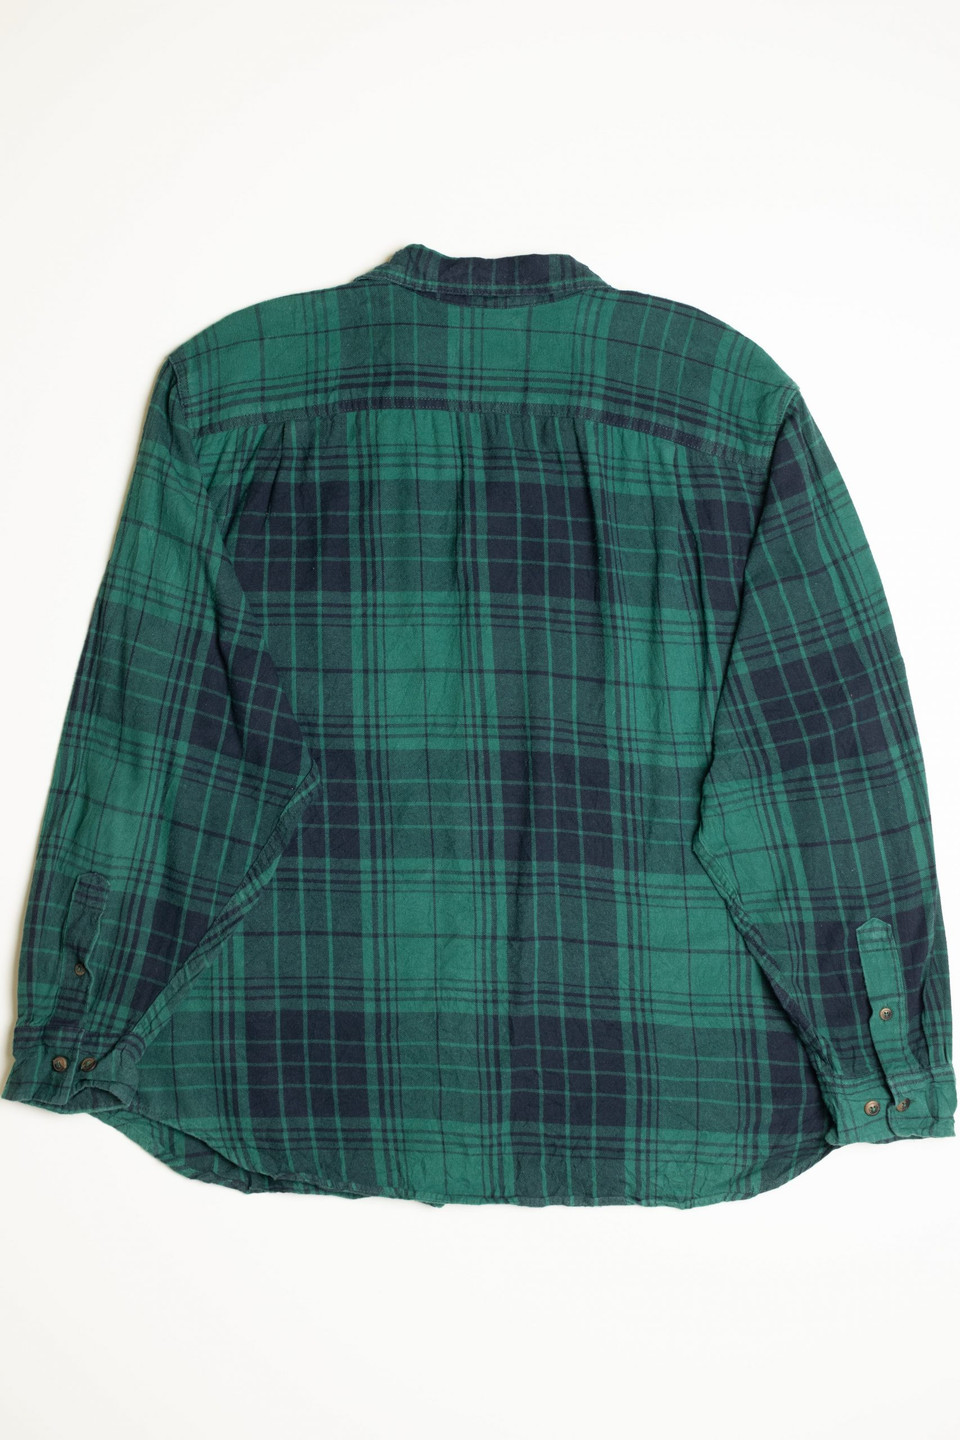 Thermal Sleeve Blue Mountain Flannel Shirt 4291 - Ragstock.com